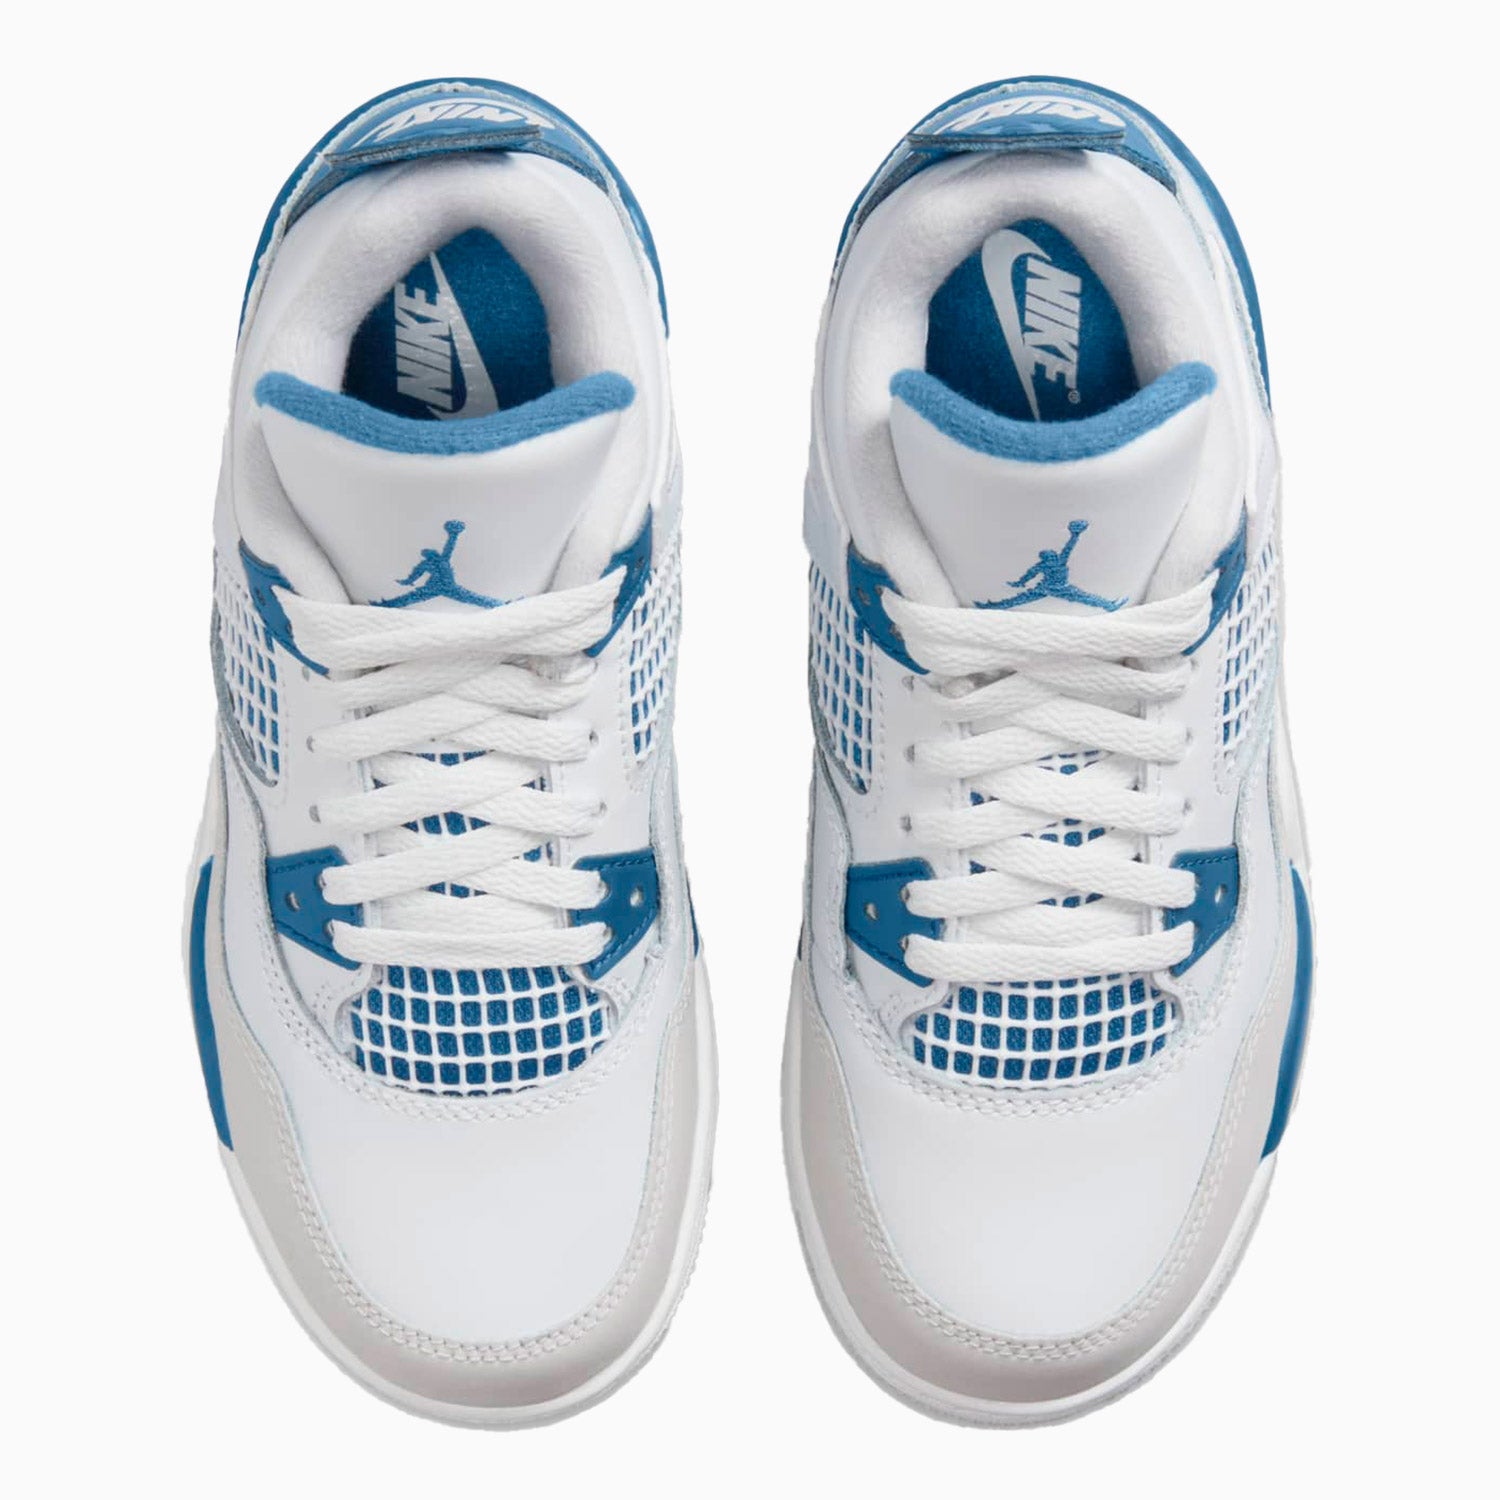 kids-air-jordan-4-retro-military-blue-pre-school-shoes-bq7669-141